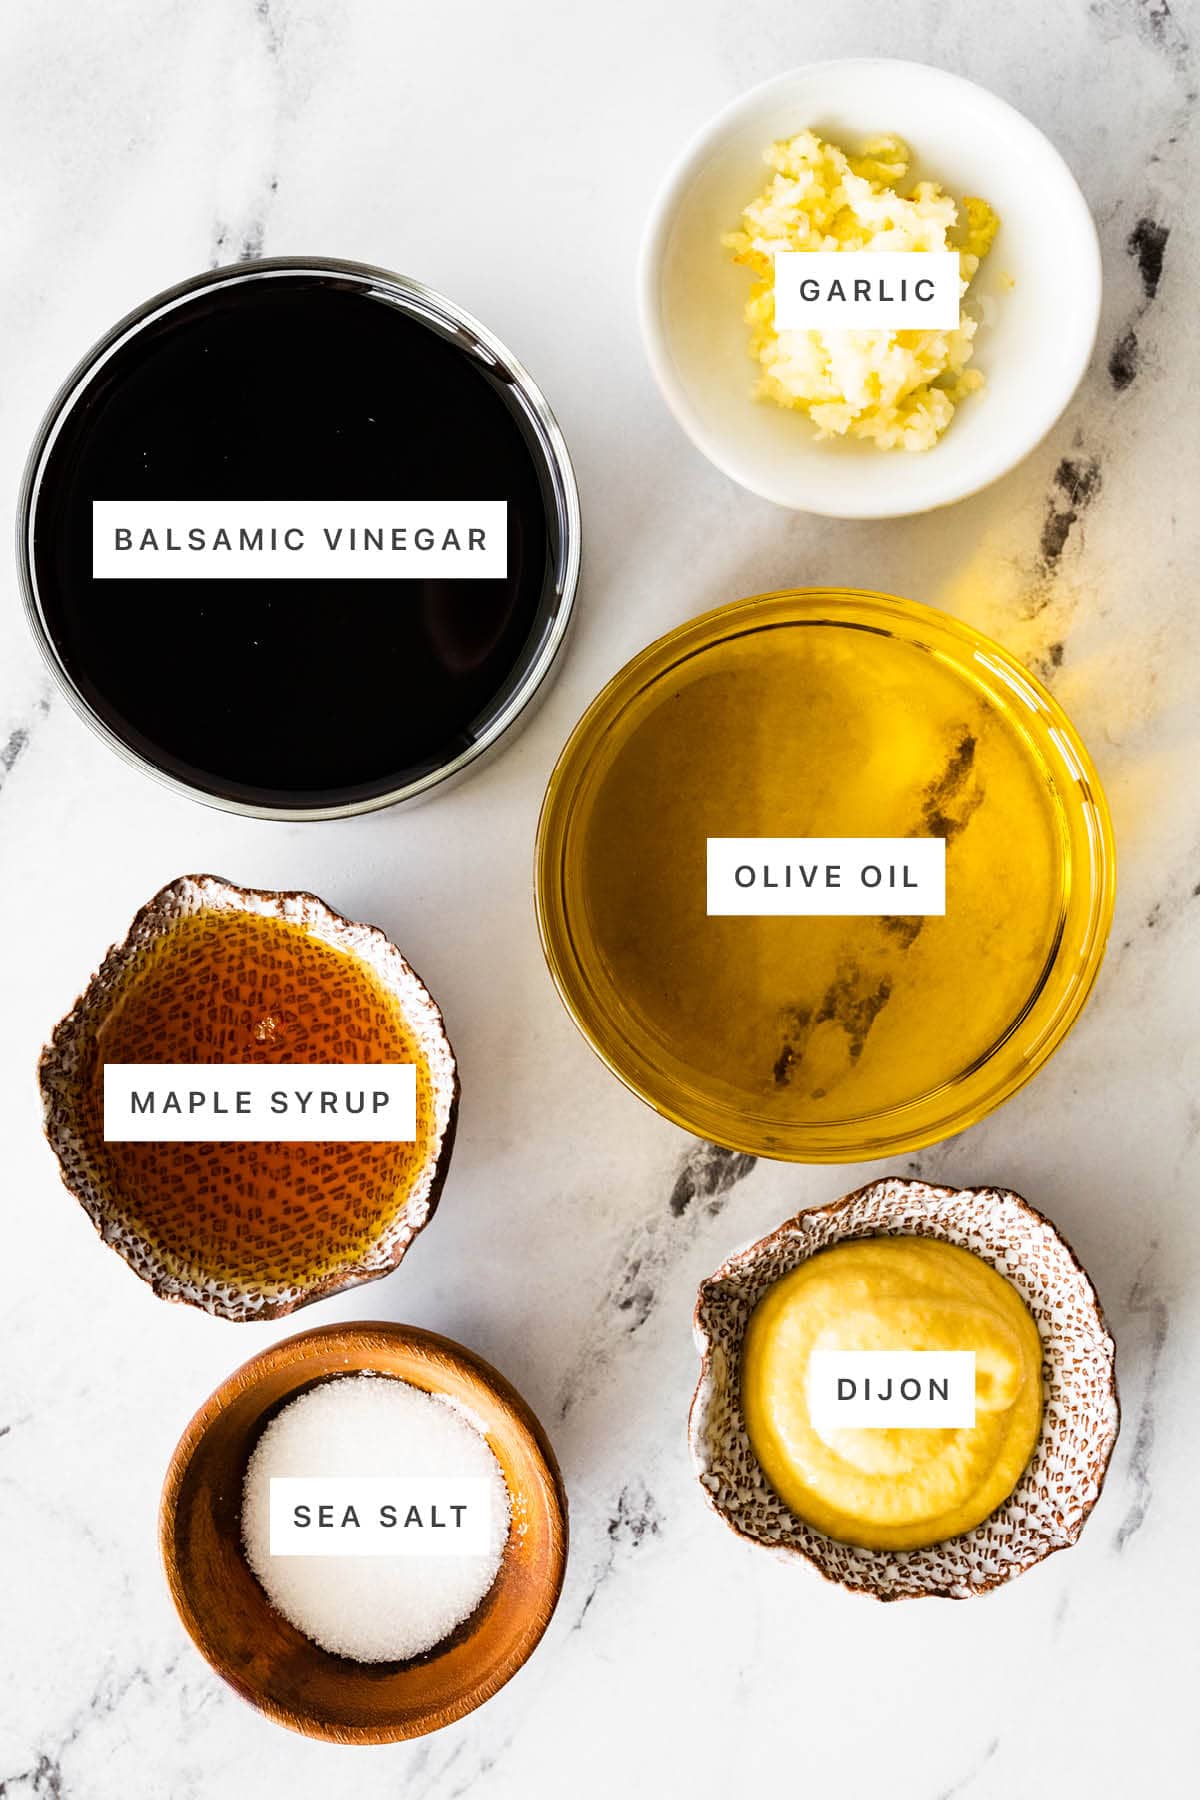 Ingredients measured out to make Balsamic Vinaigrette: balsamic vinegar, garlic, maple syrup, olive oil, sea salt and dijon.